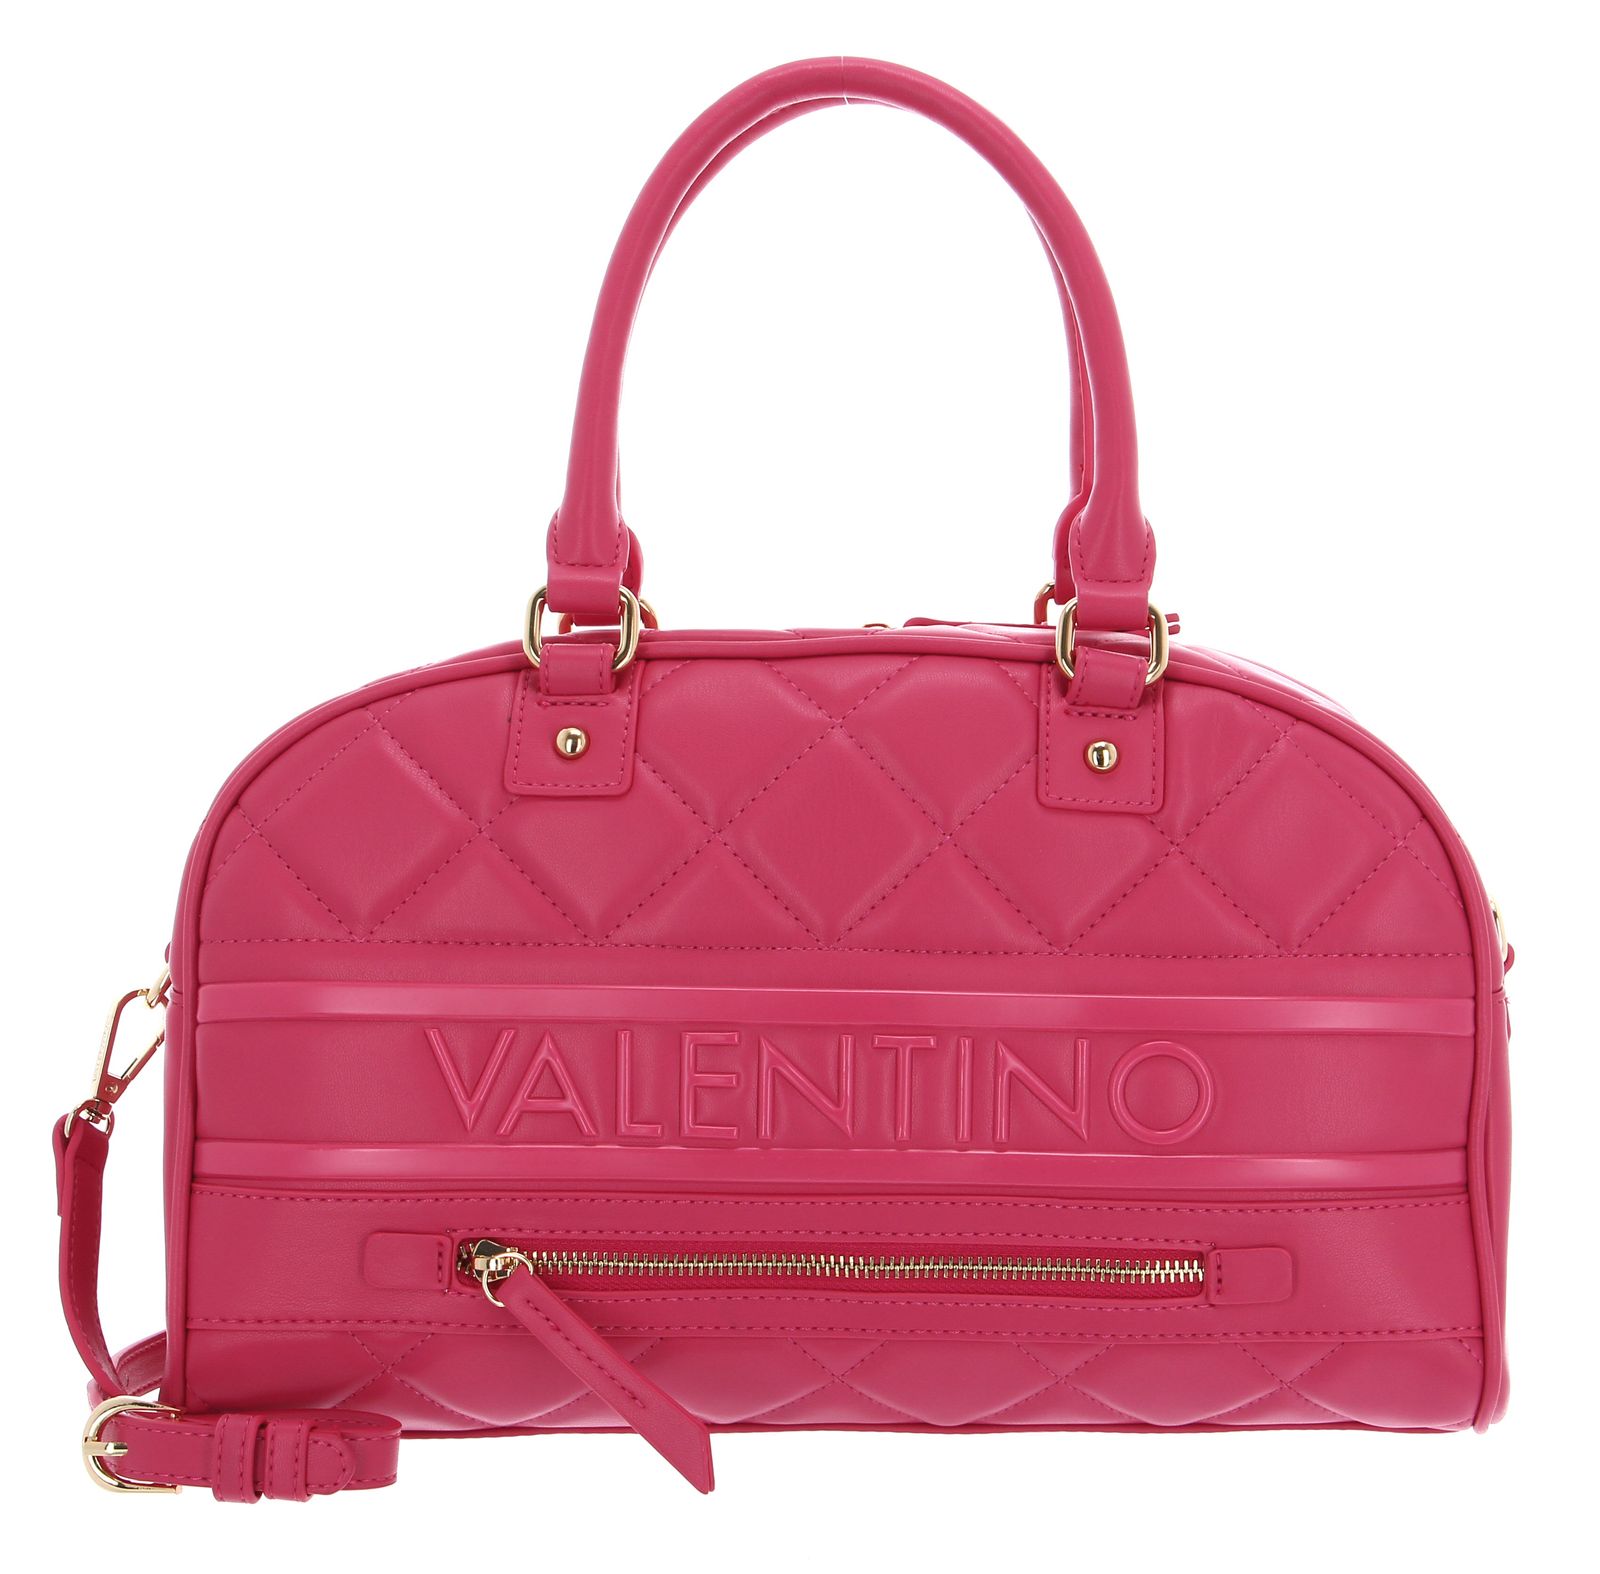 VALENTINO Satchel Pretty Bag Rosa, Buy bags, purses & accessories online